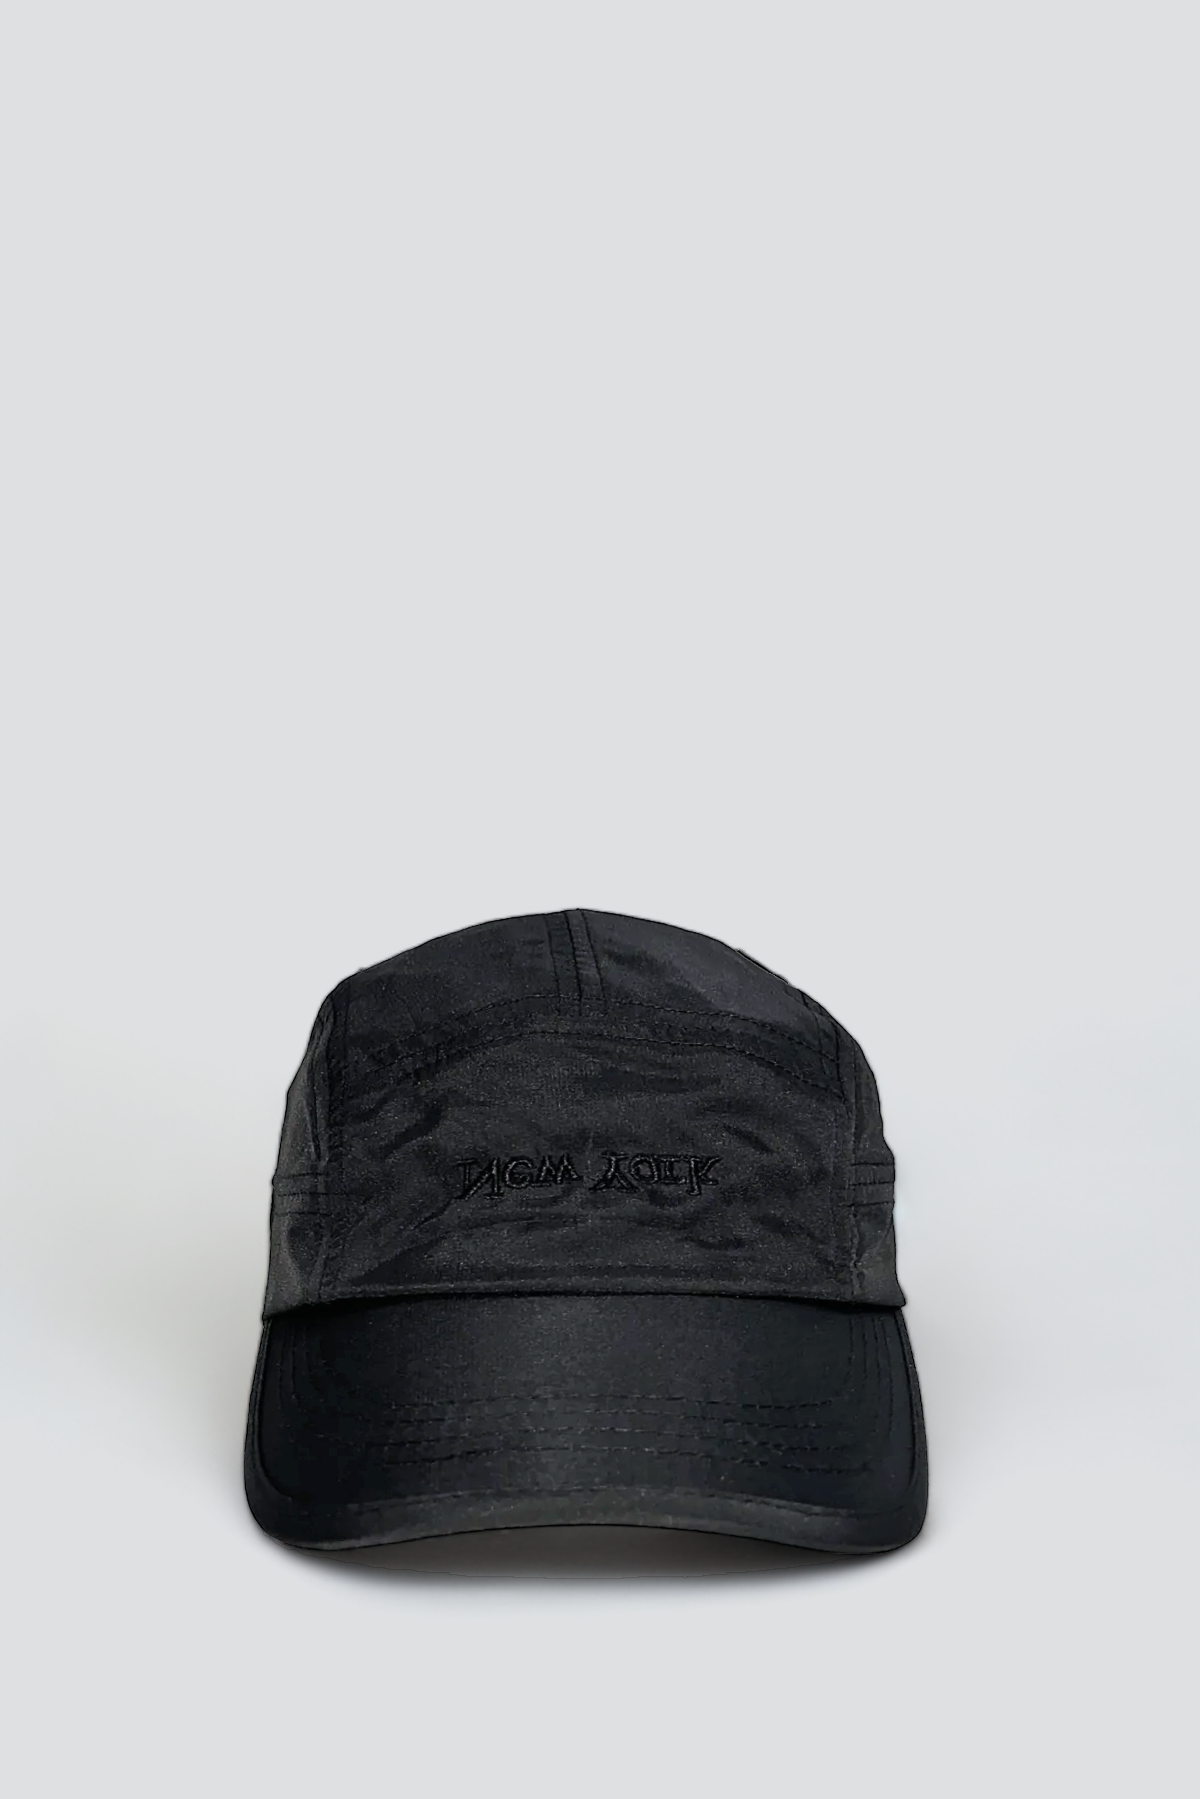 Nylon New York Embroidered Dry Hat - Black